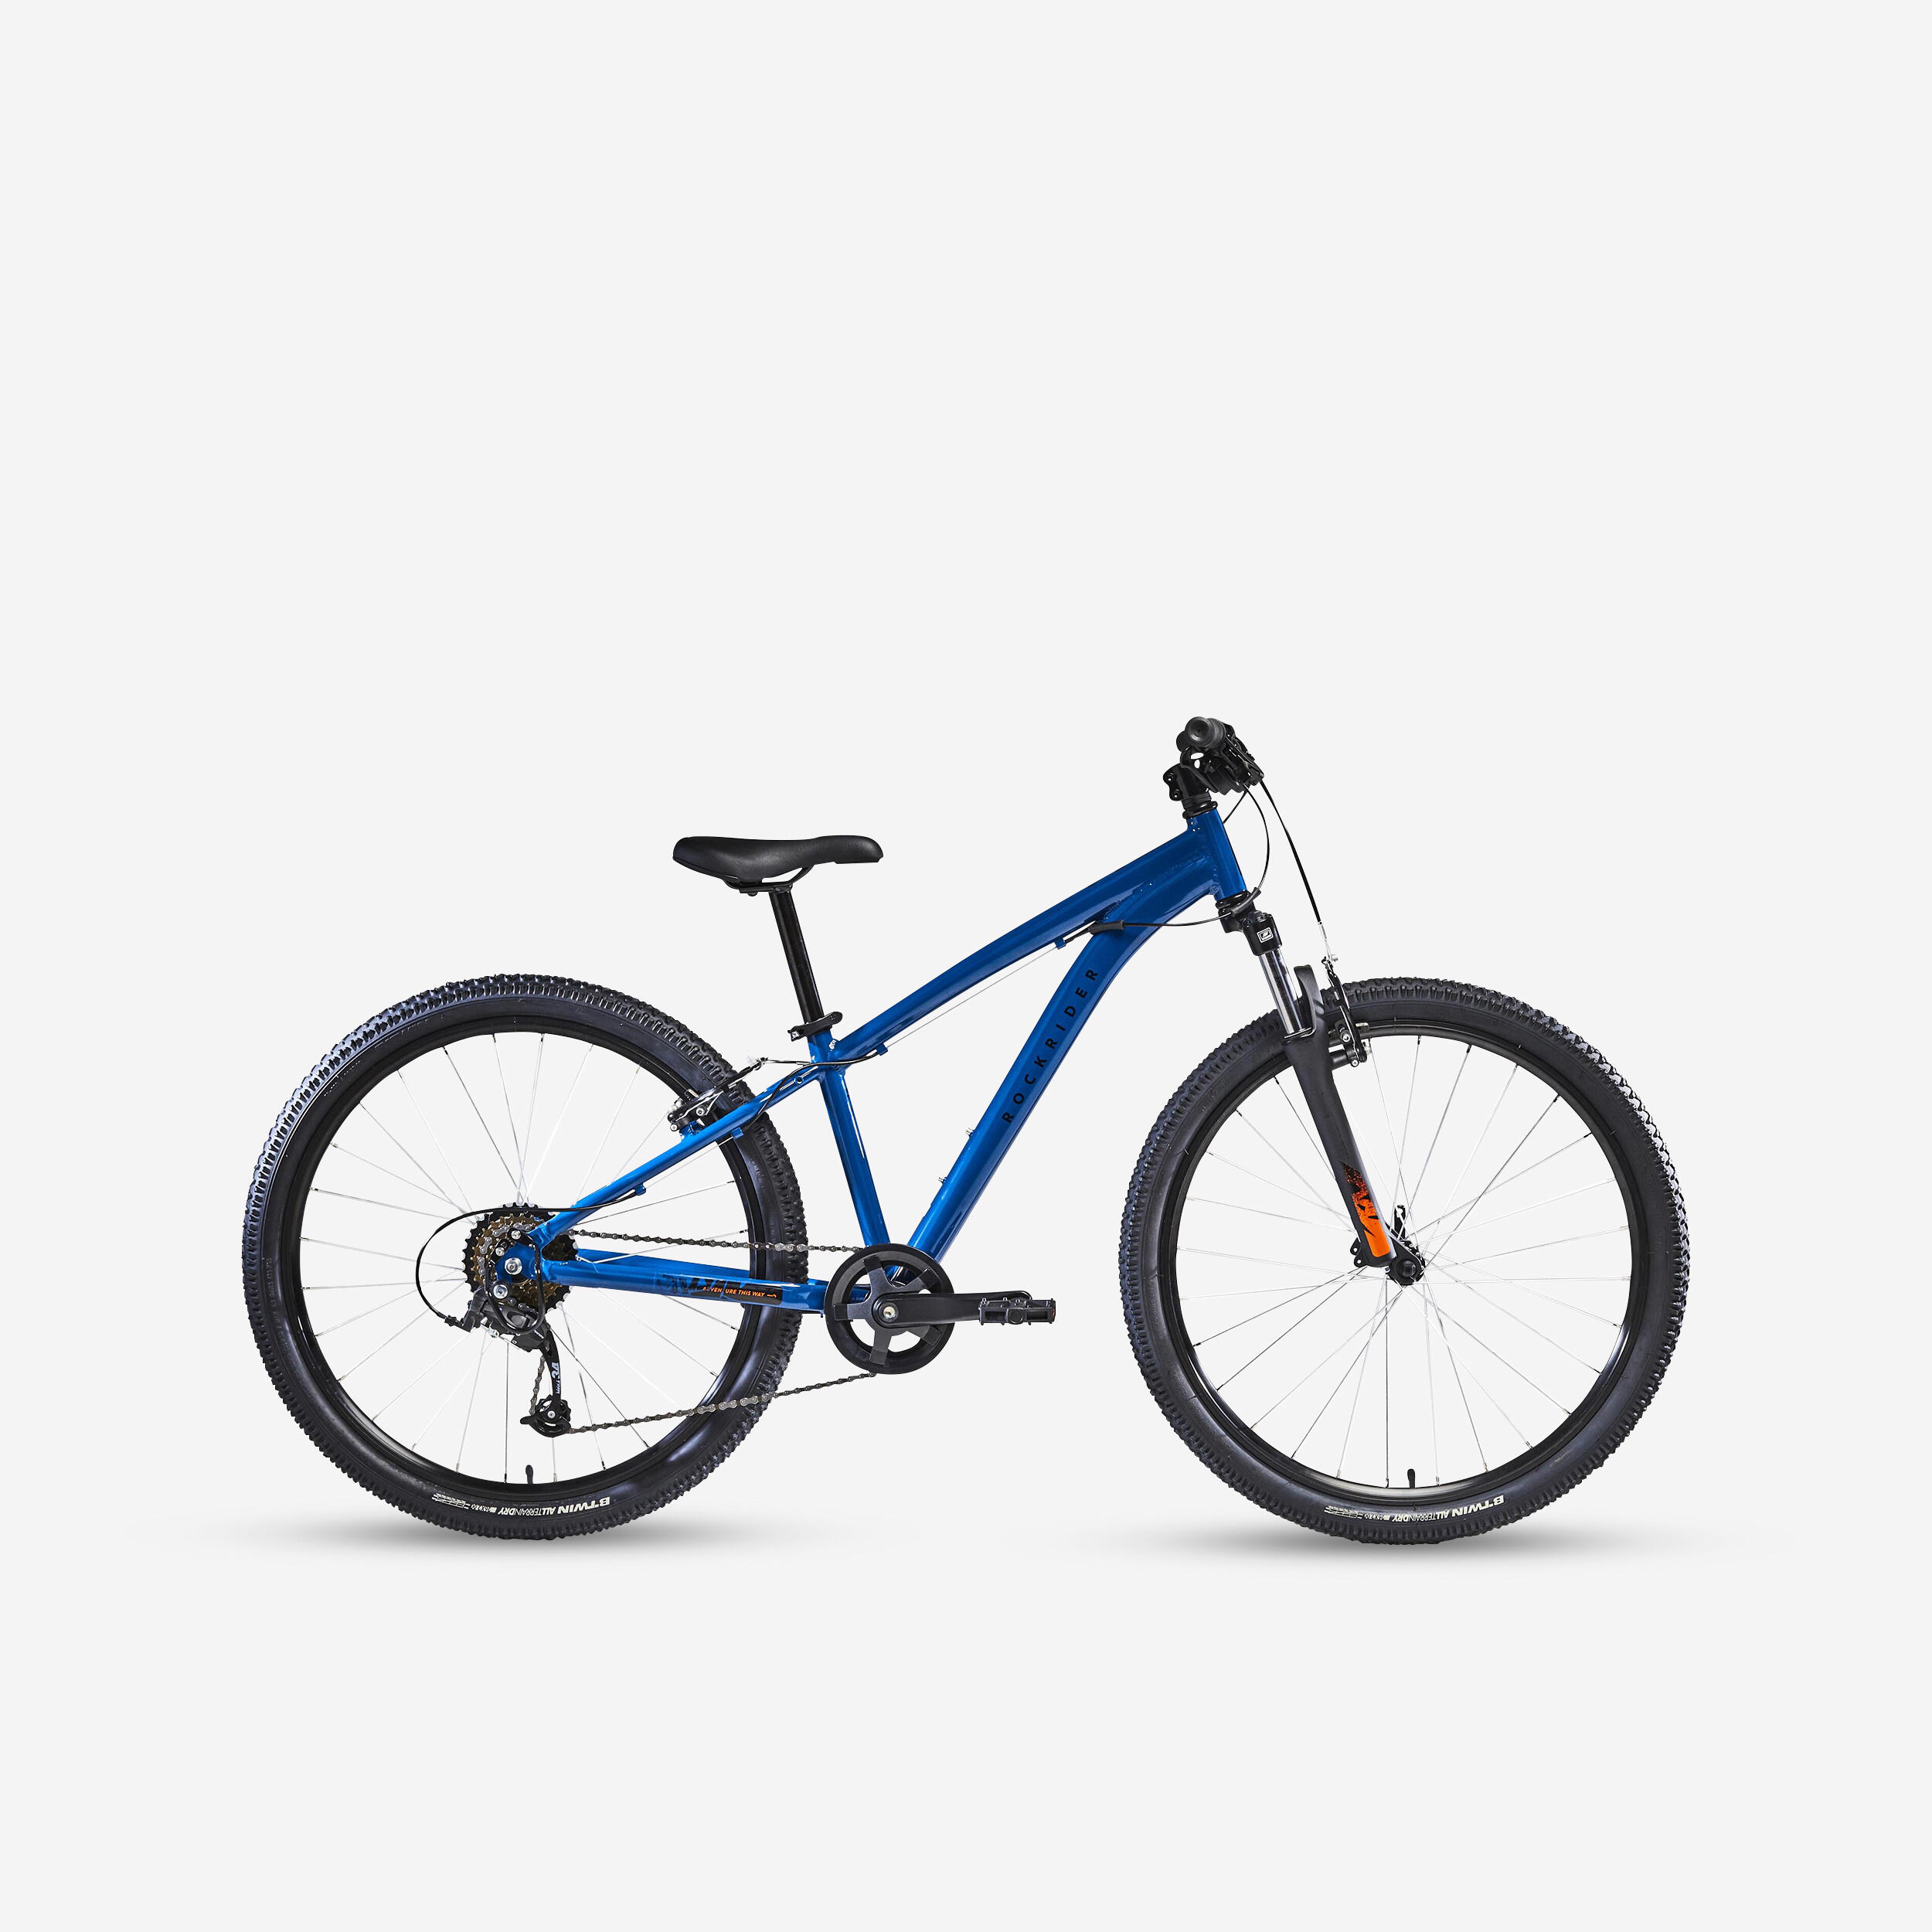 ROCKRIDER Kids' 26-inch lightweight aluminium mountain bike, blue